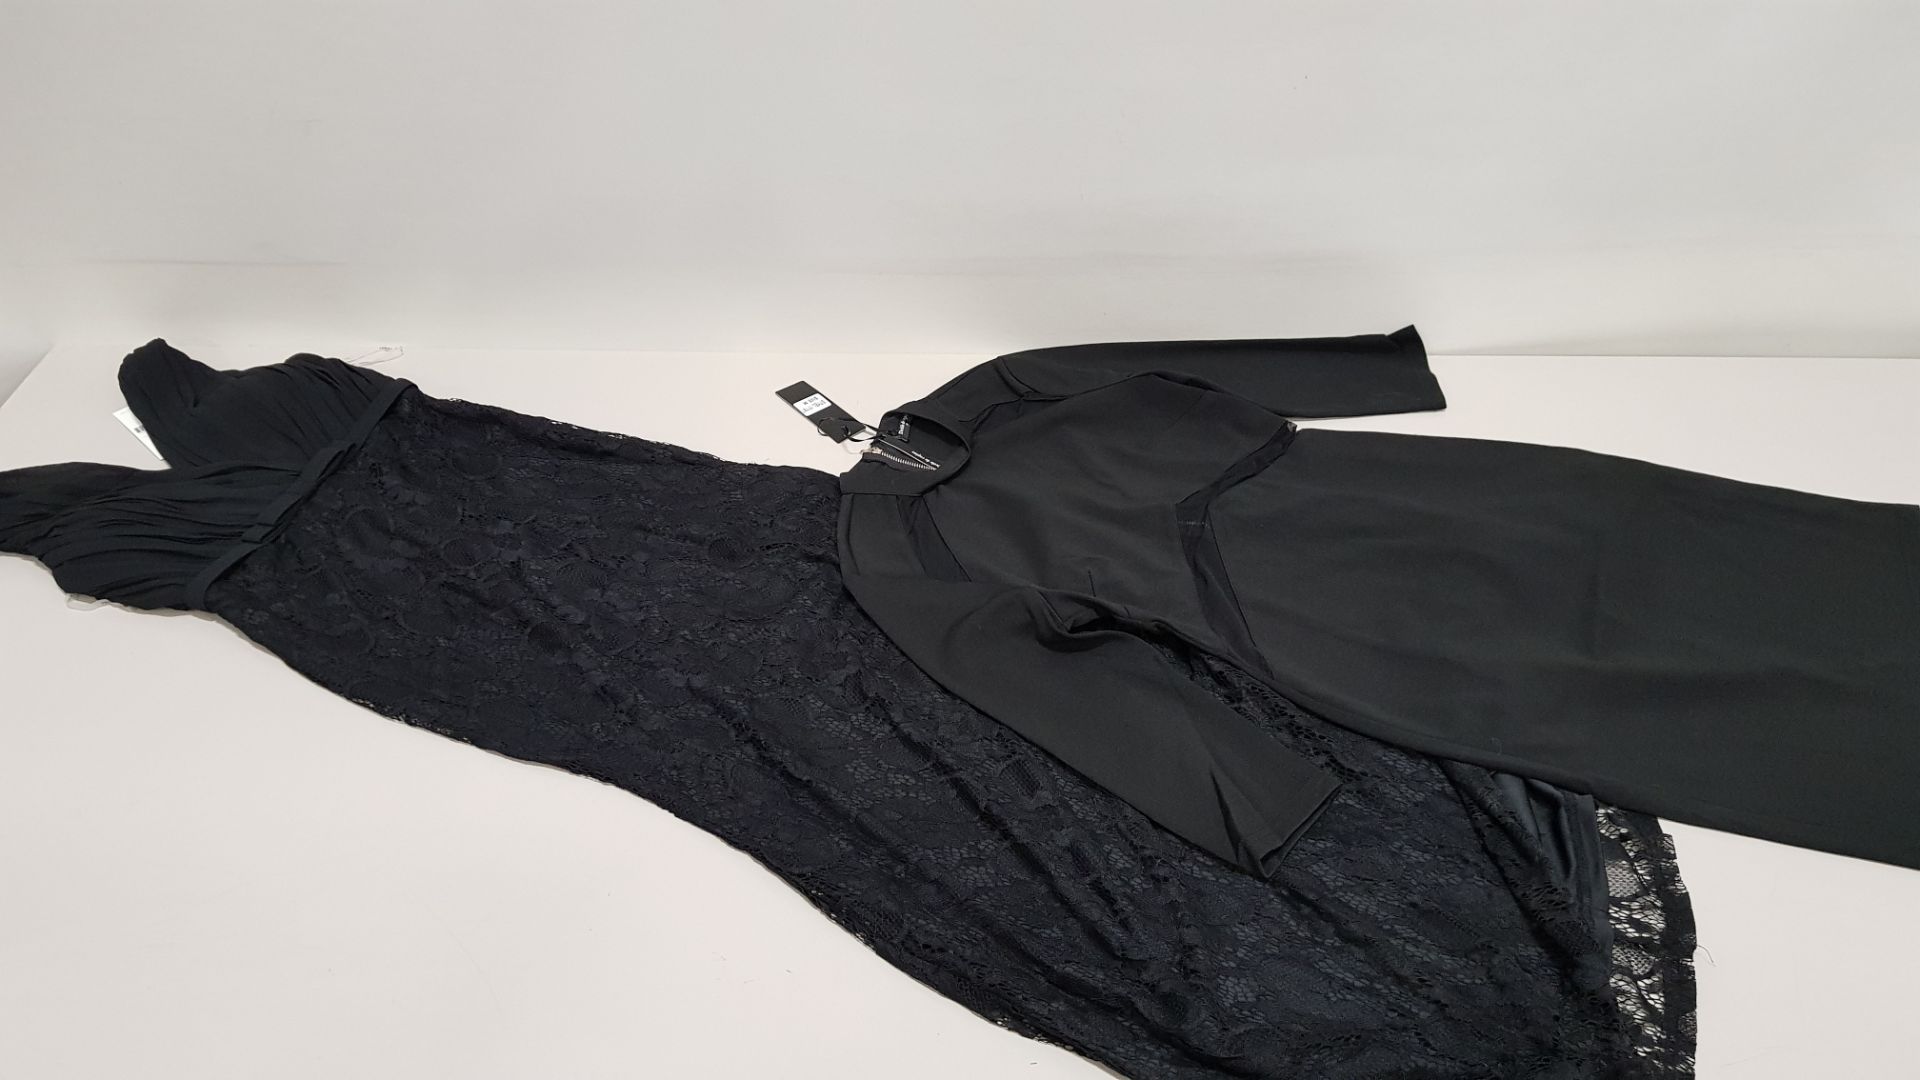 35 X BRAND NEW CHARMS PARIS BLACK DRESSES